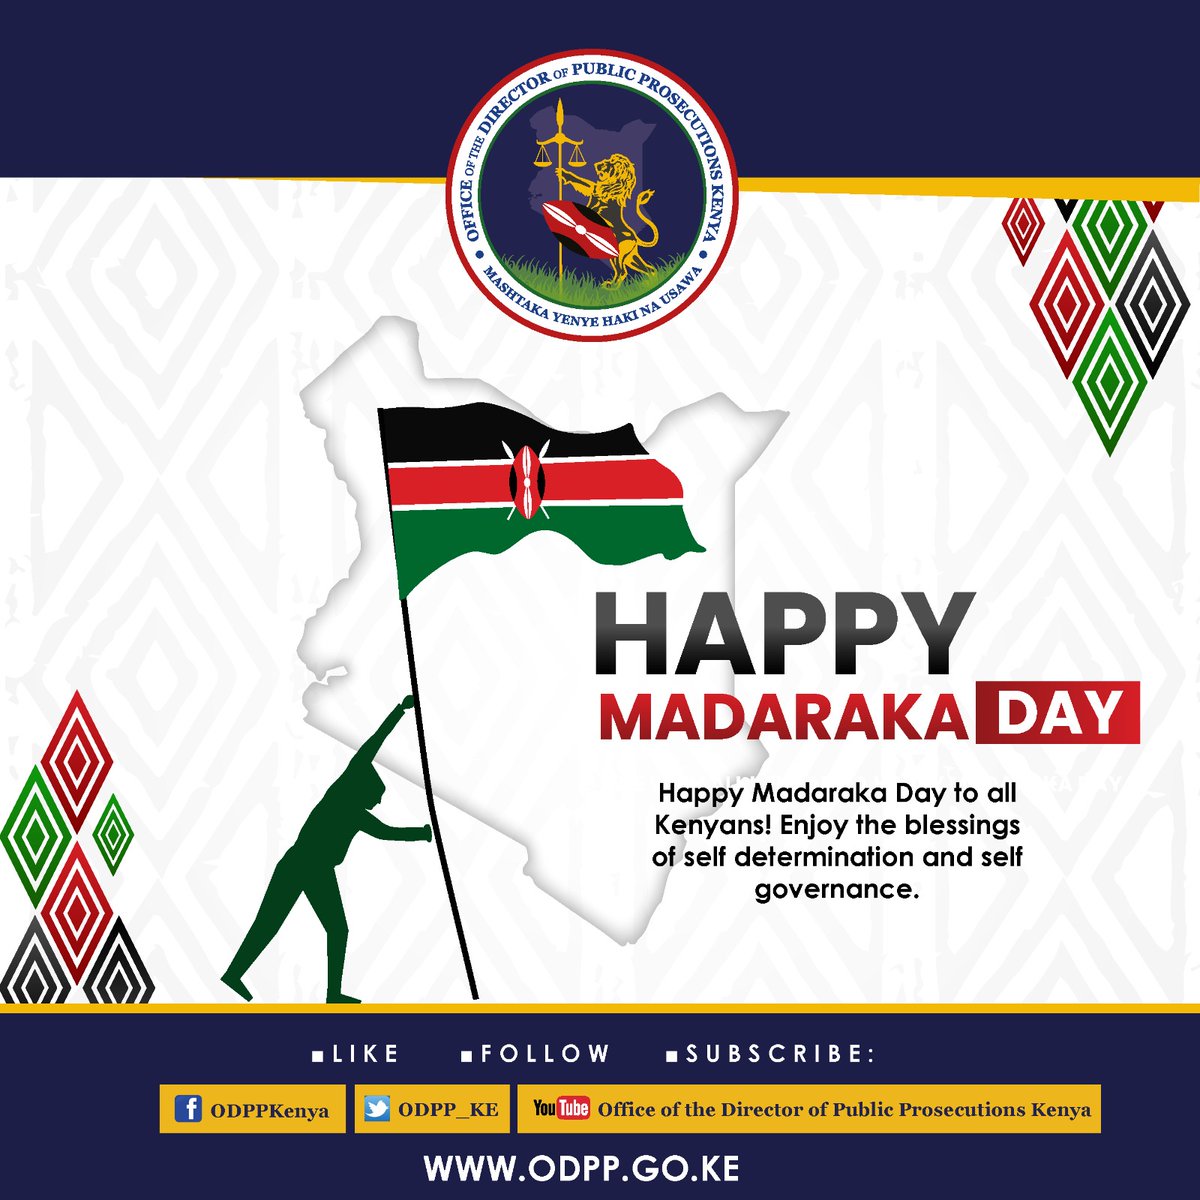 Happy Madaraka Day to us all! God bless Kenya! #HakiNaUsawa